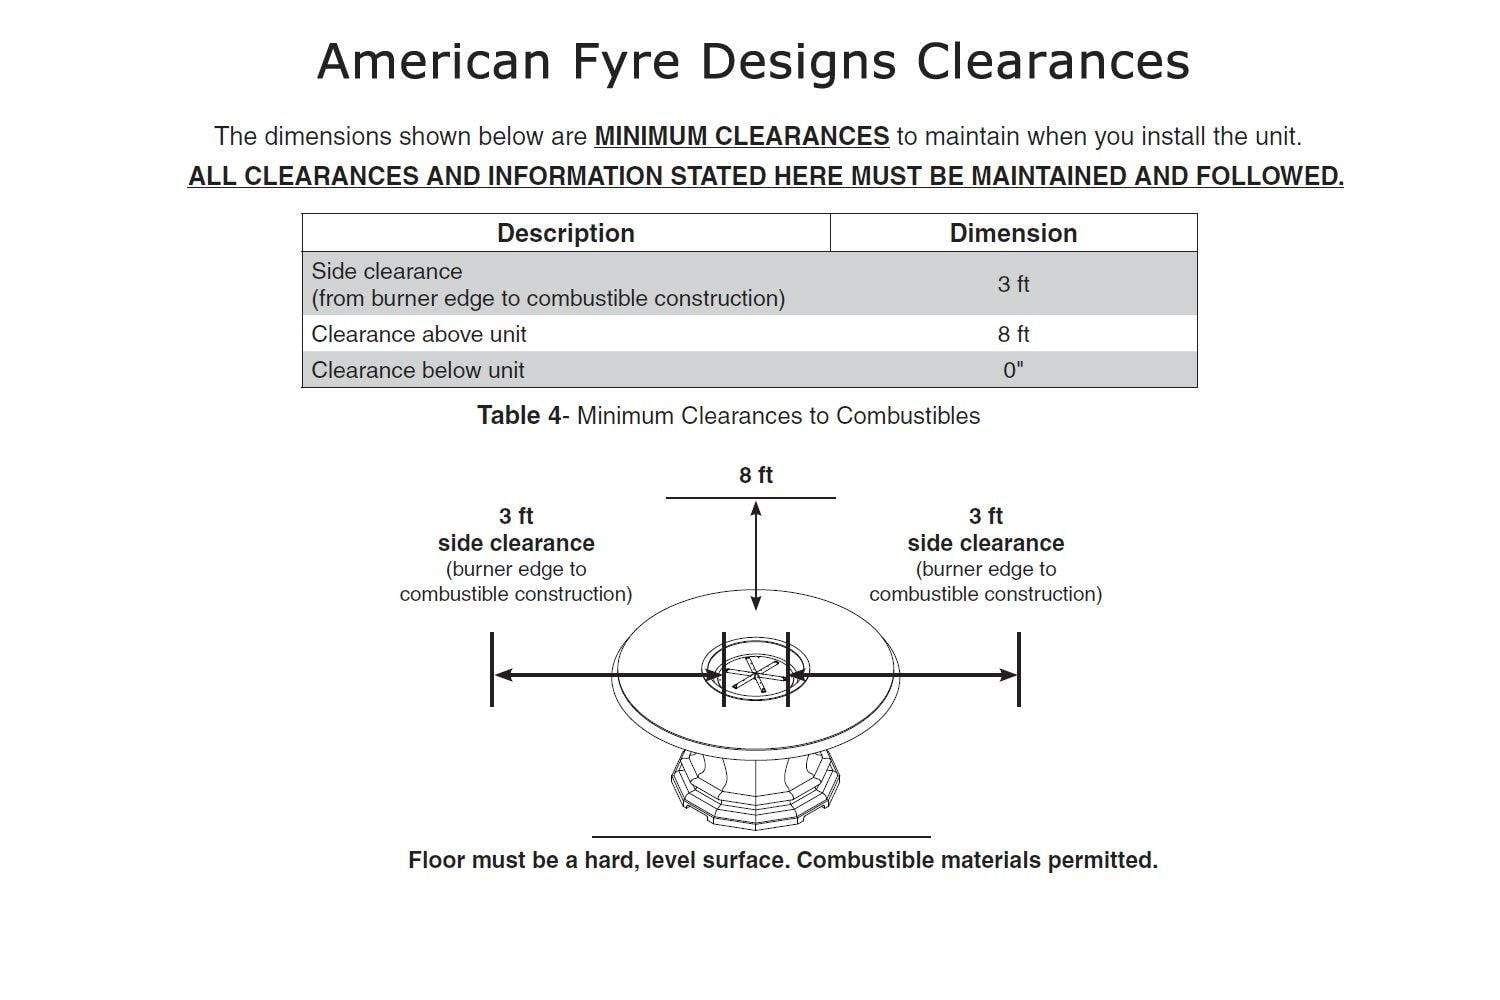 American Fyre Designs Fire Table American Fyre Designs - 24 Inch Cosmopolitan Square Firetable with Knob Valve, Smoke, Propane Gas